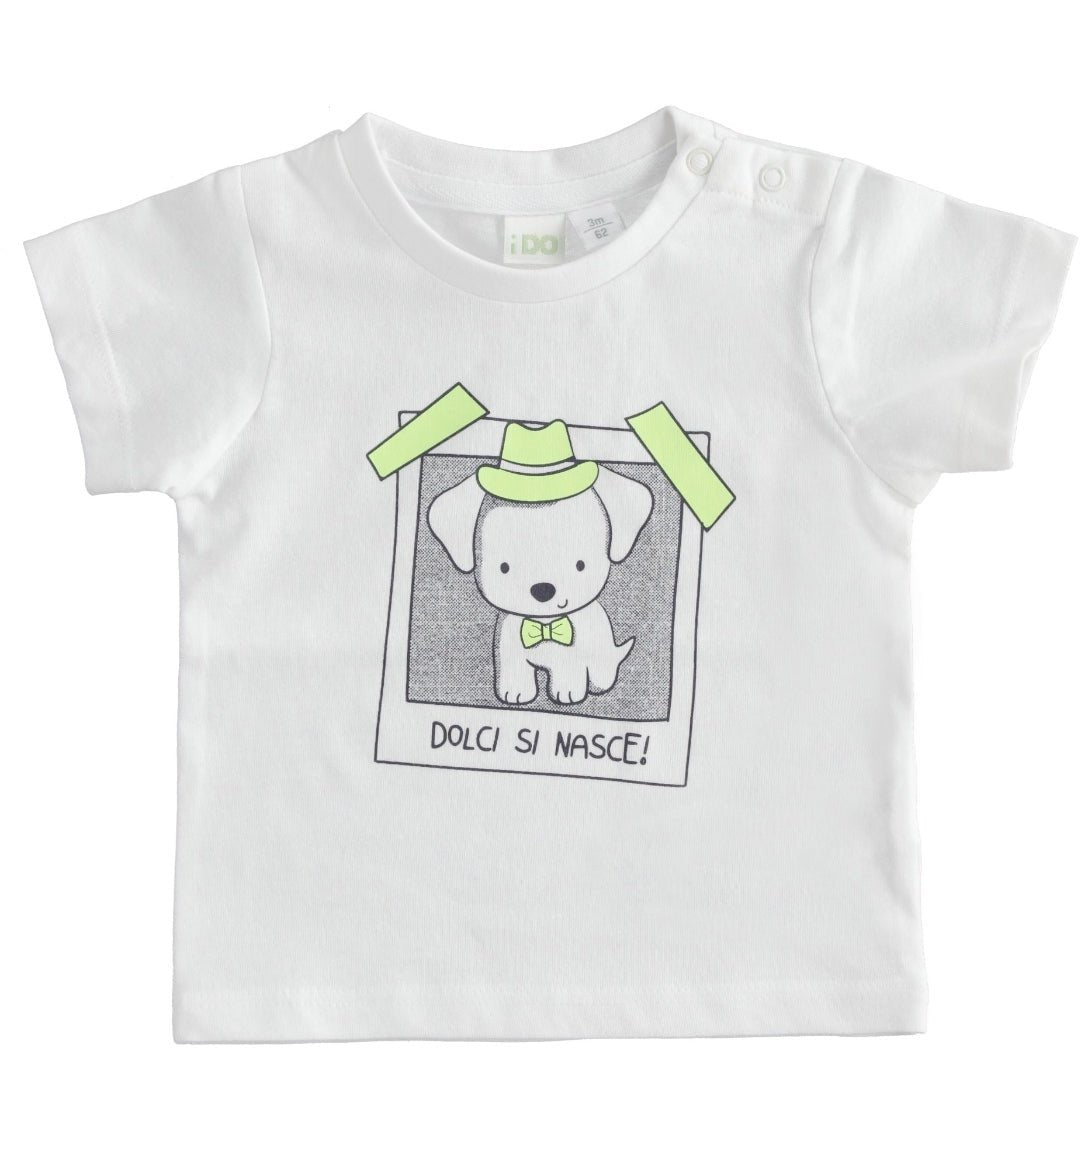 T-Shirt mezza manica bimbo - Coccole e Ricami |email: info@coccoleericami.shop| P.Iva 09642670583